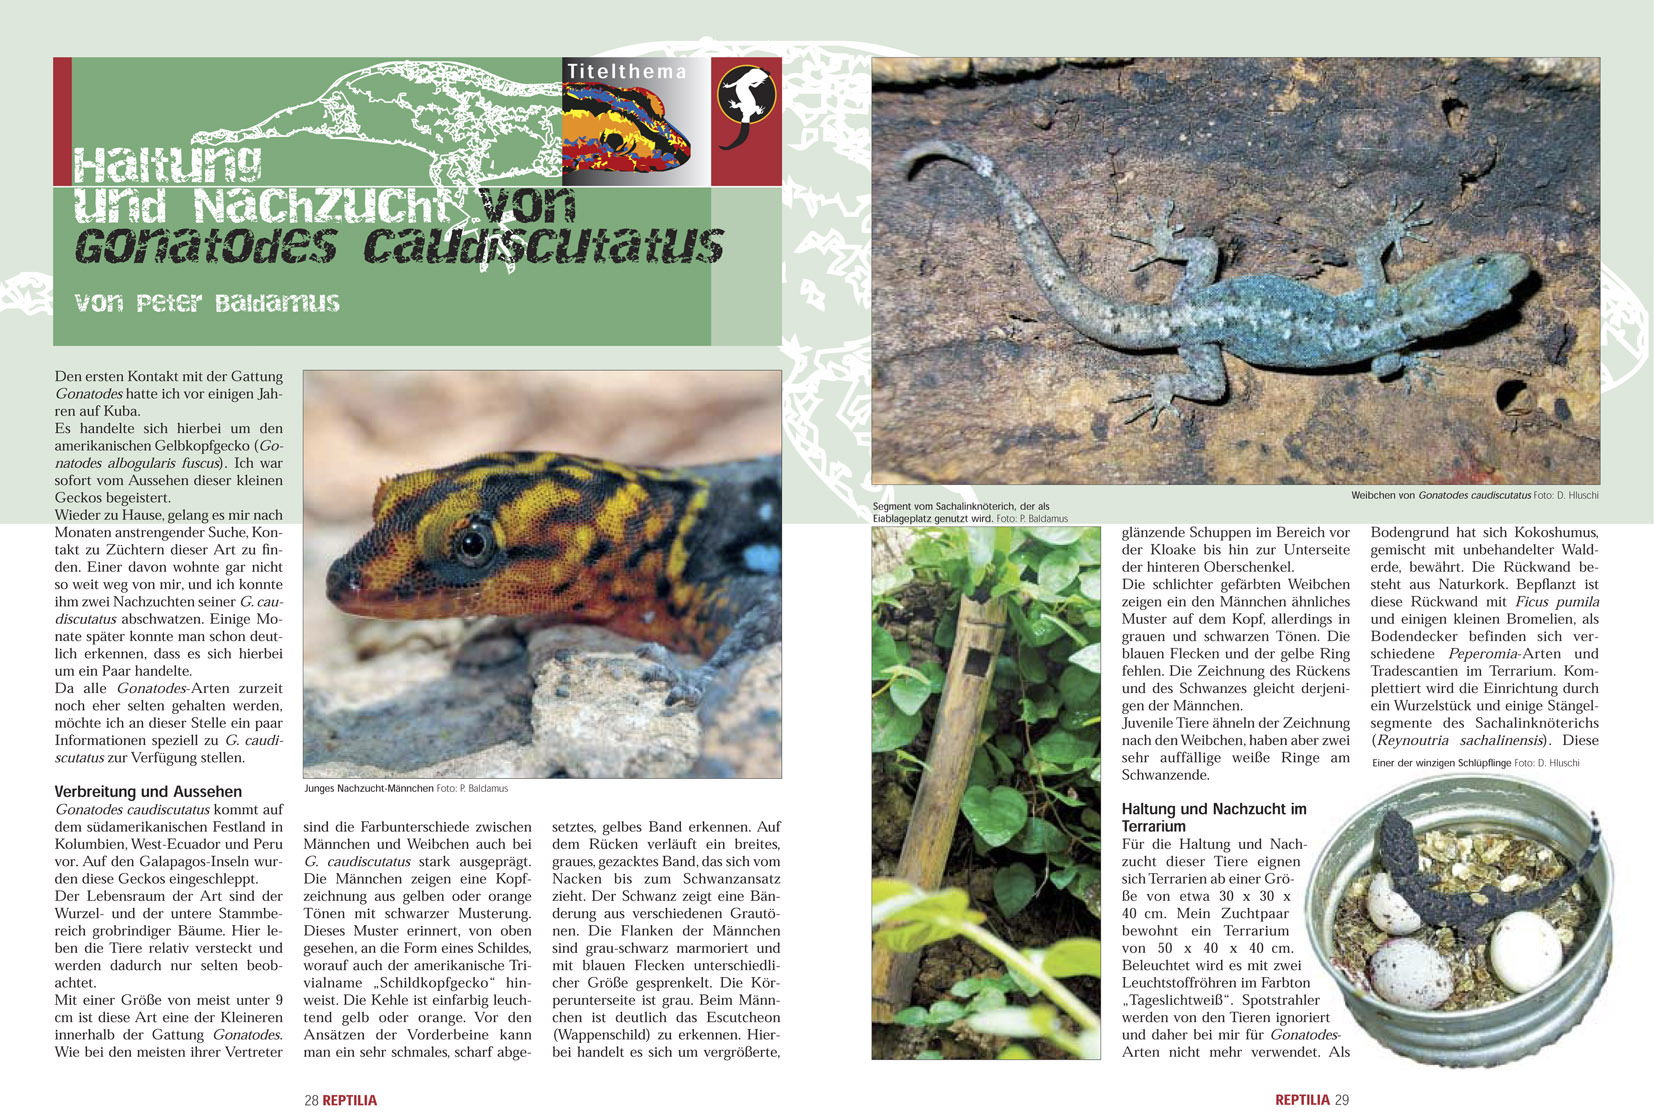 Reptilia 78 - Gonatodes - Neotropische Taggeckos August/September 2009